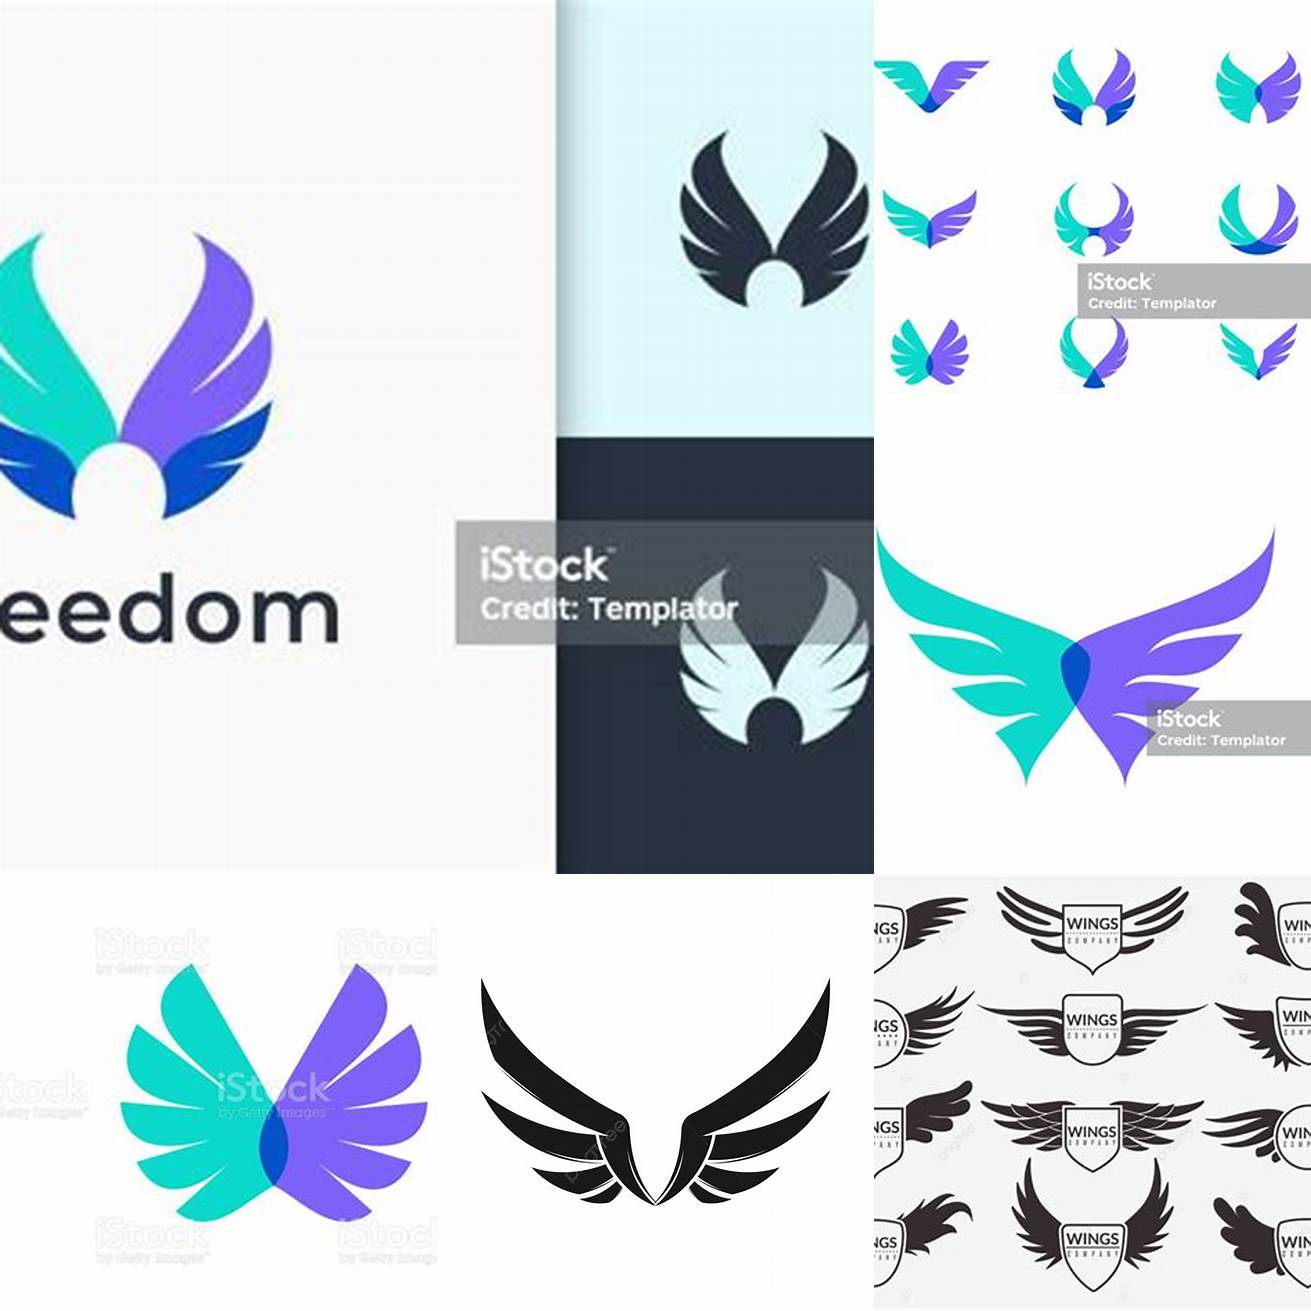 4 Emblem dengan gambar sayap atau benda yang mewakili kebebasan